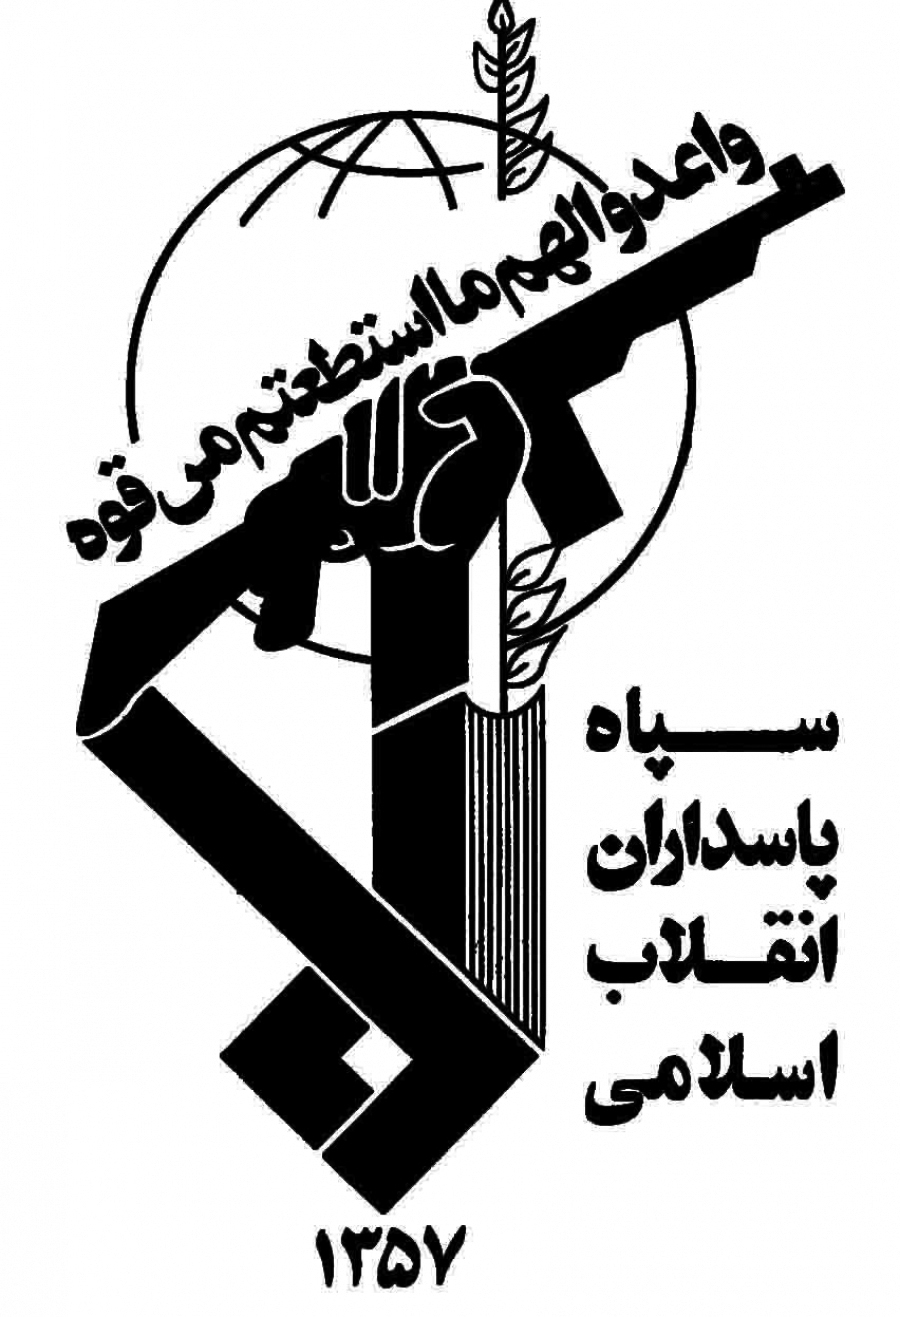 Figure 2: Official Emblem of the IRGC